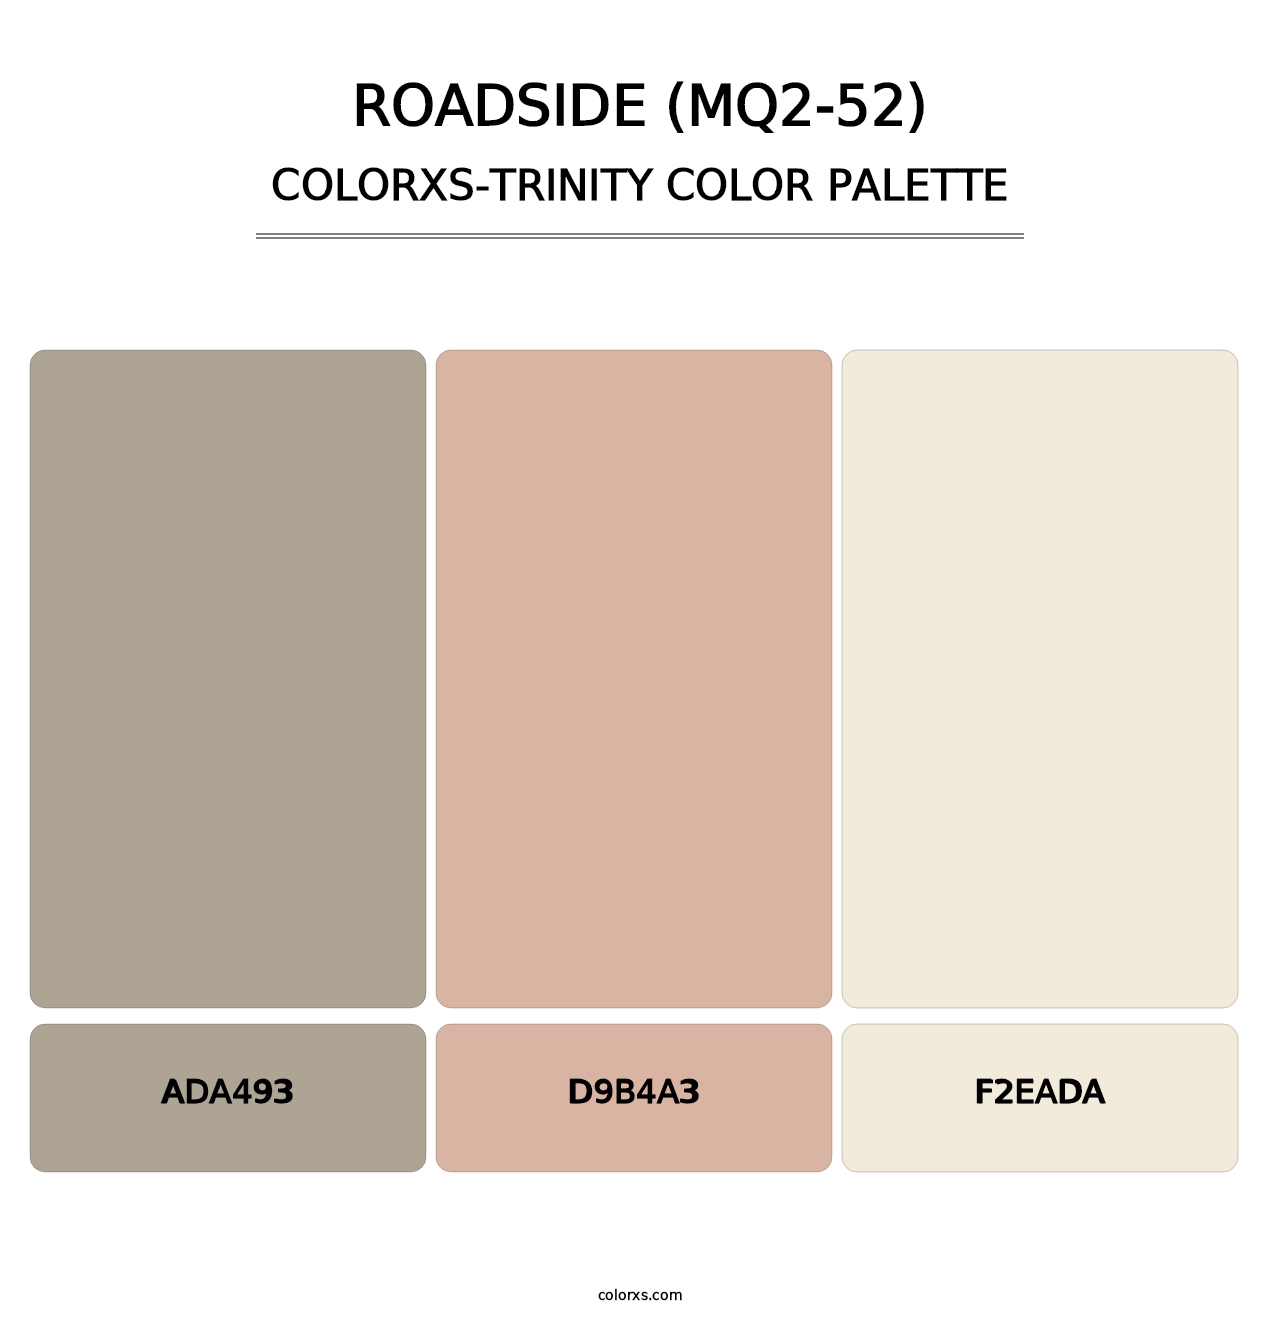 Roadside (MQ2-52) - Colorxs Trinity Palette